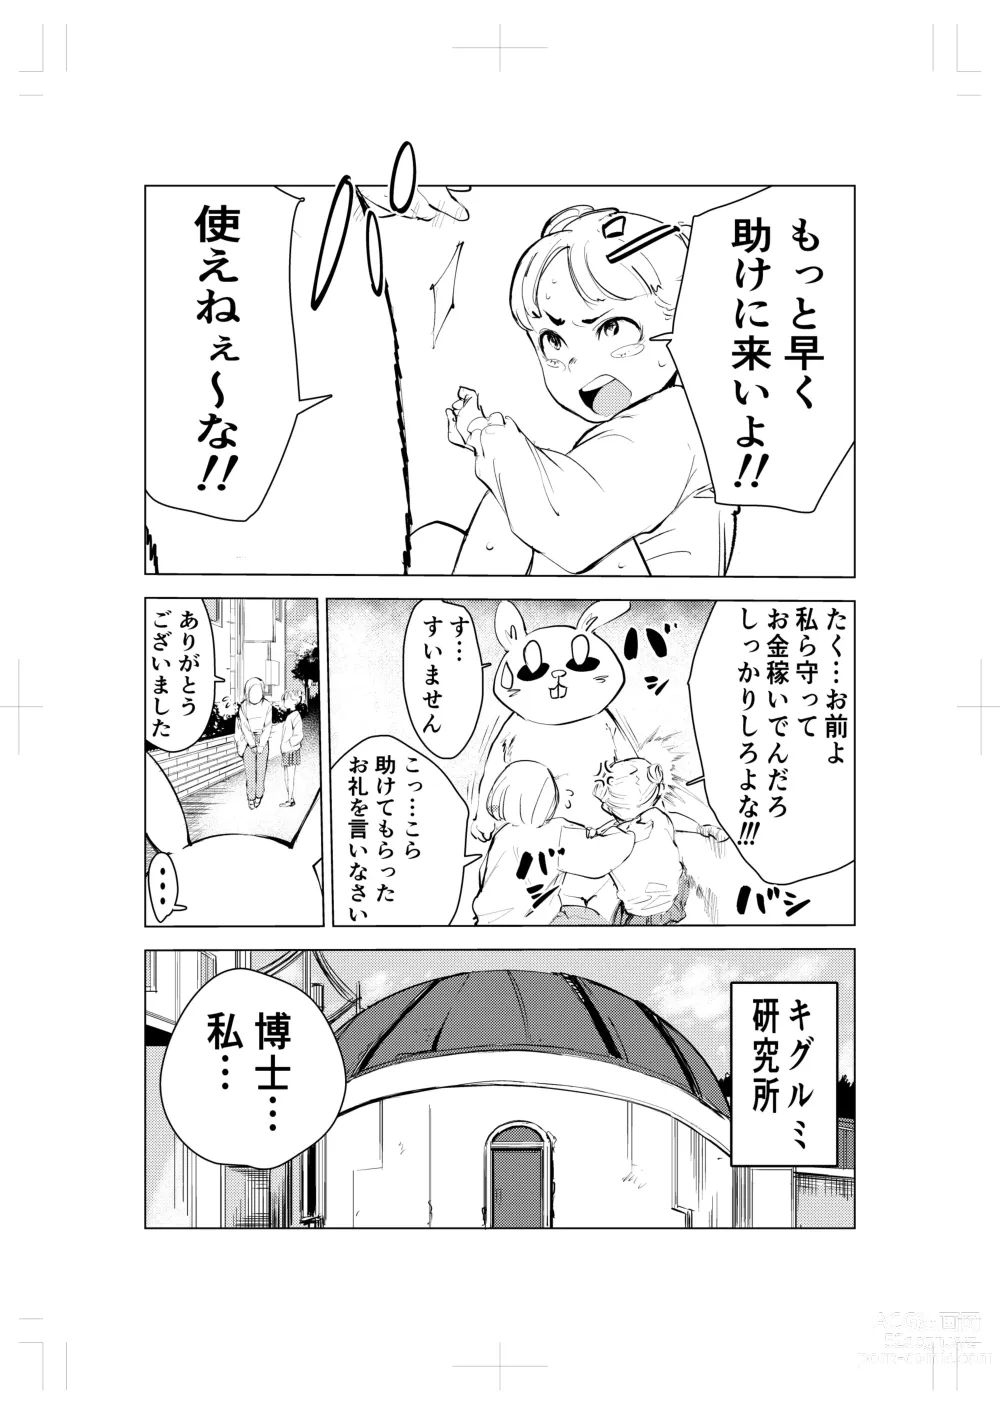 Page 5 of doujinshi Kigurumi niku manjū